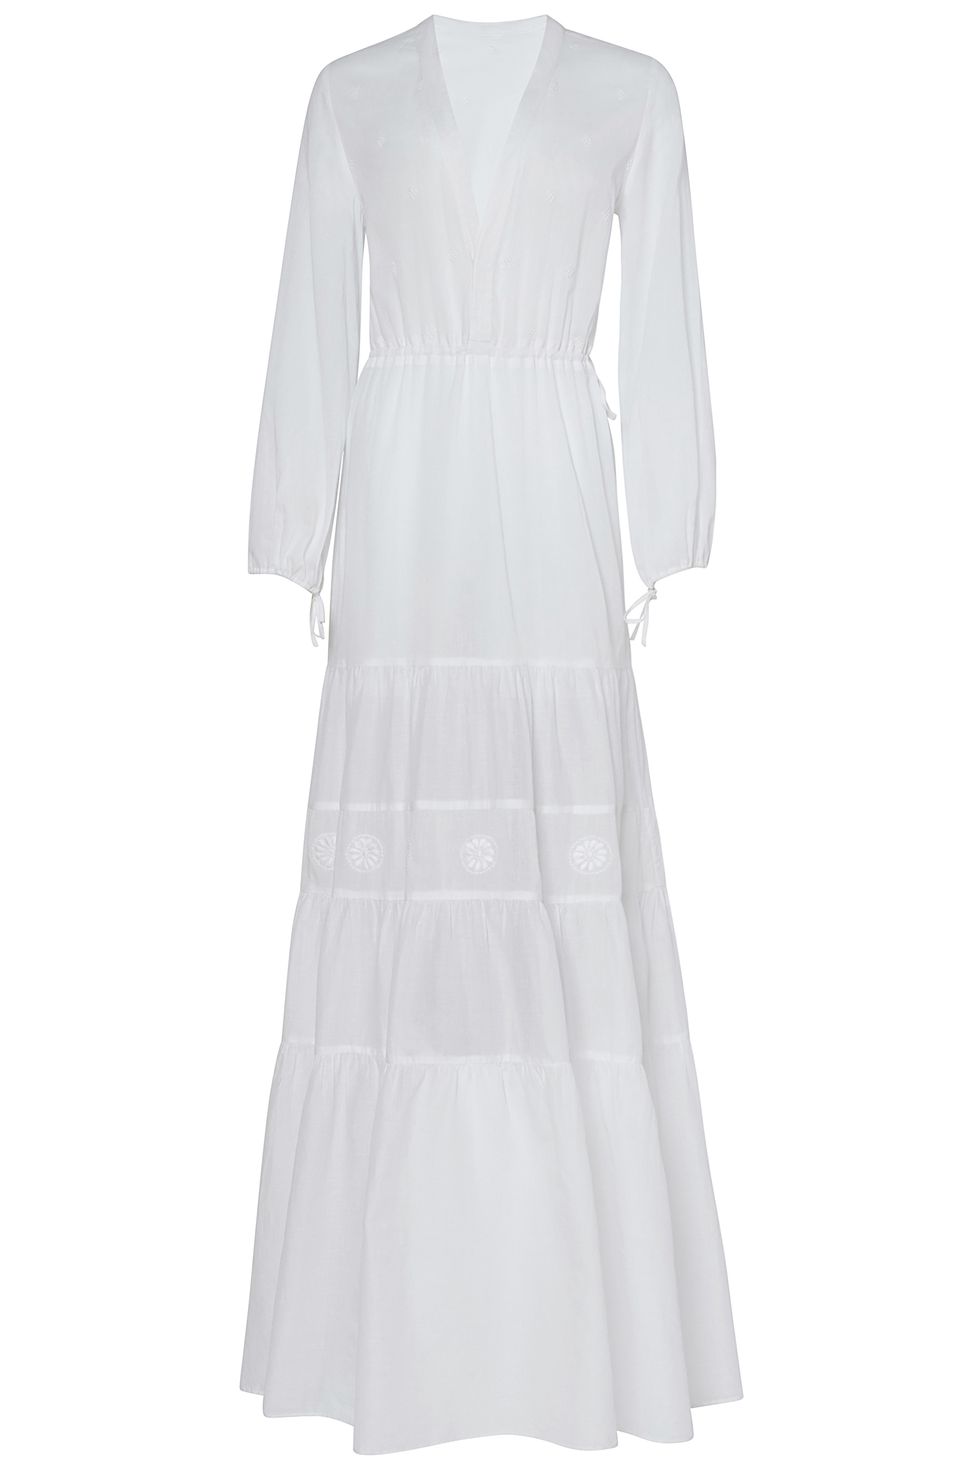 <p><em>Merlette</em><em> dress, $440, <a href="https://www.modaoperandi.com/merlette-r17/the-nosara-gown" target="_blank">modaoperandi.com</a>. </em></p>